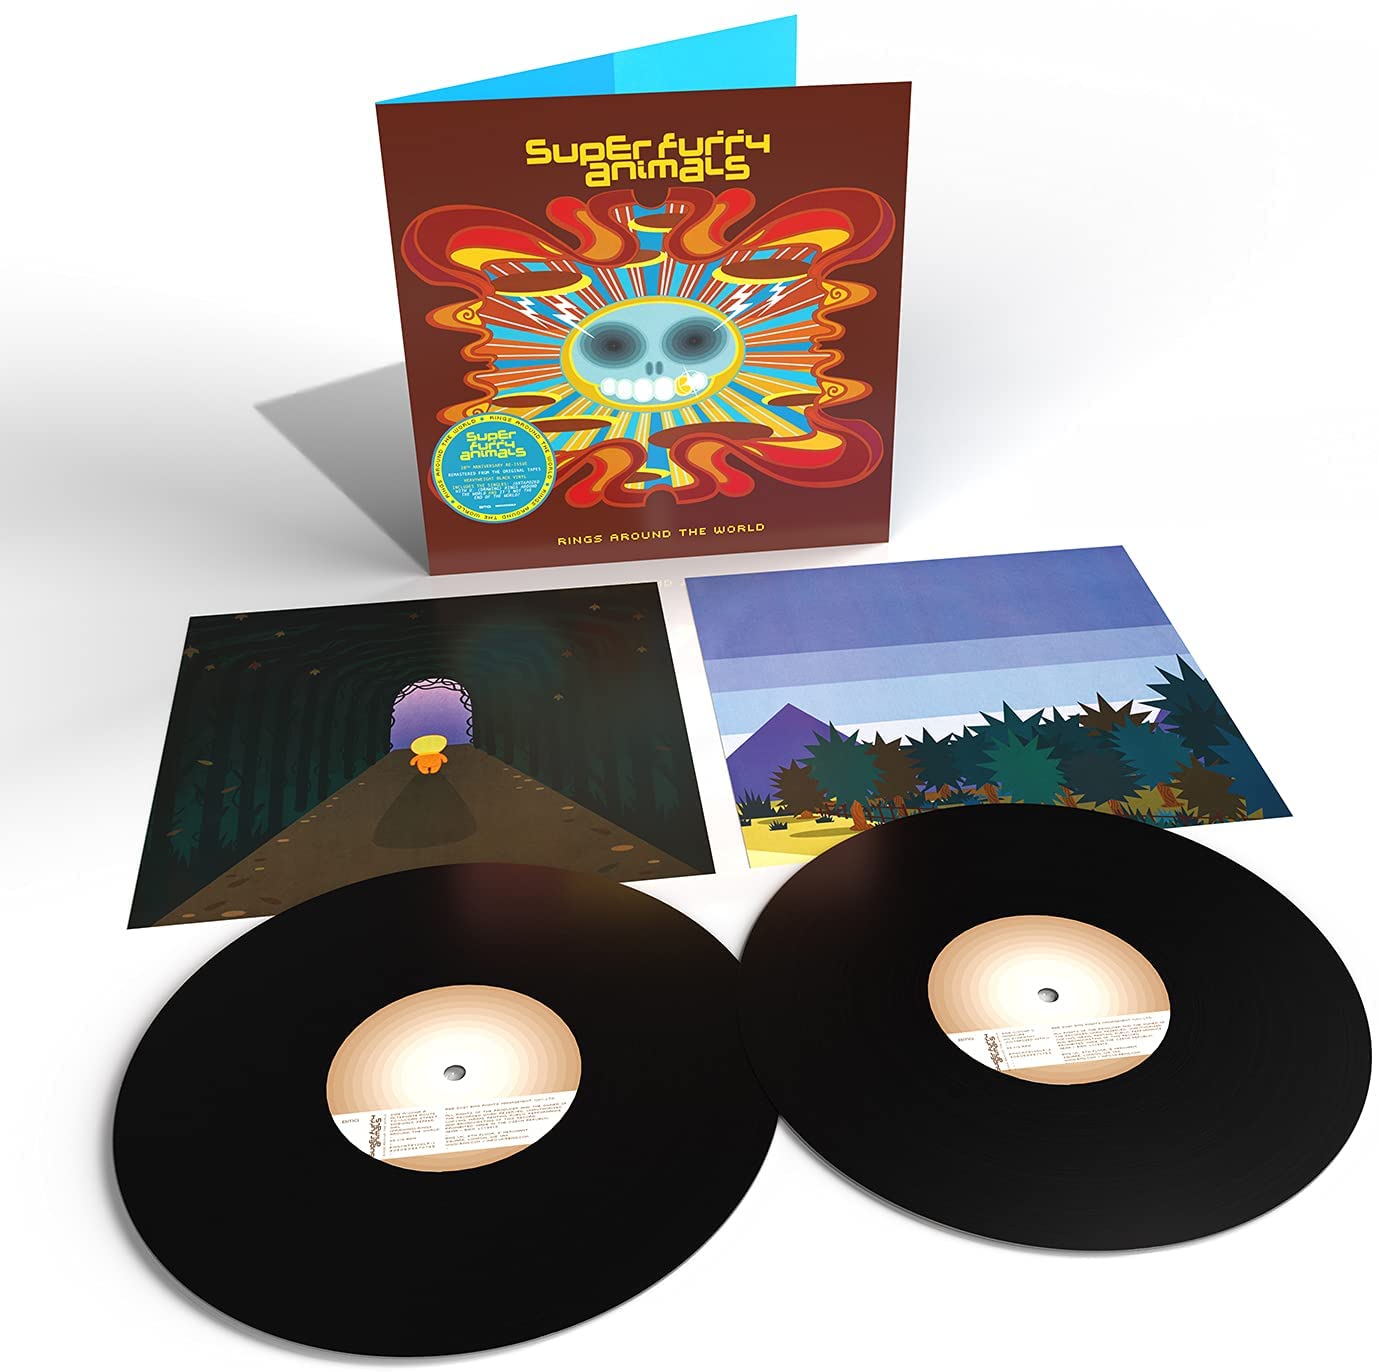 Super Furry Animals / Rings Around The World 2LP vinyl reissue